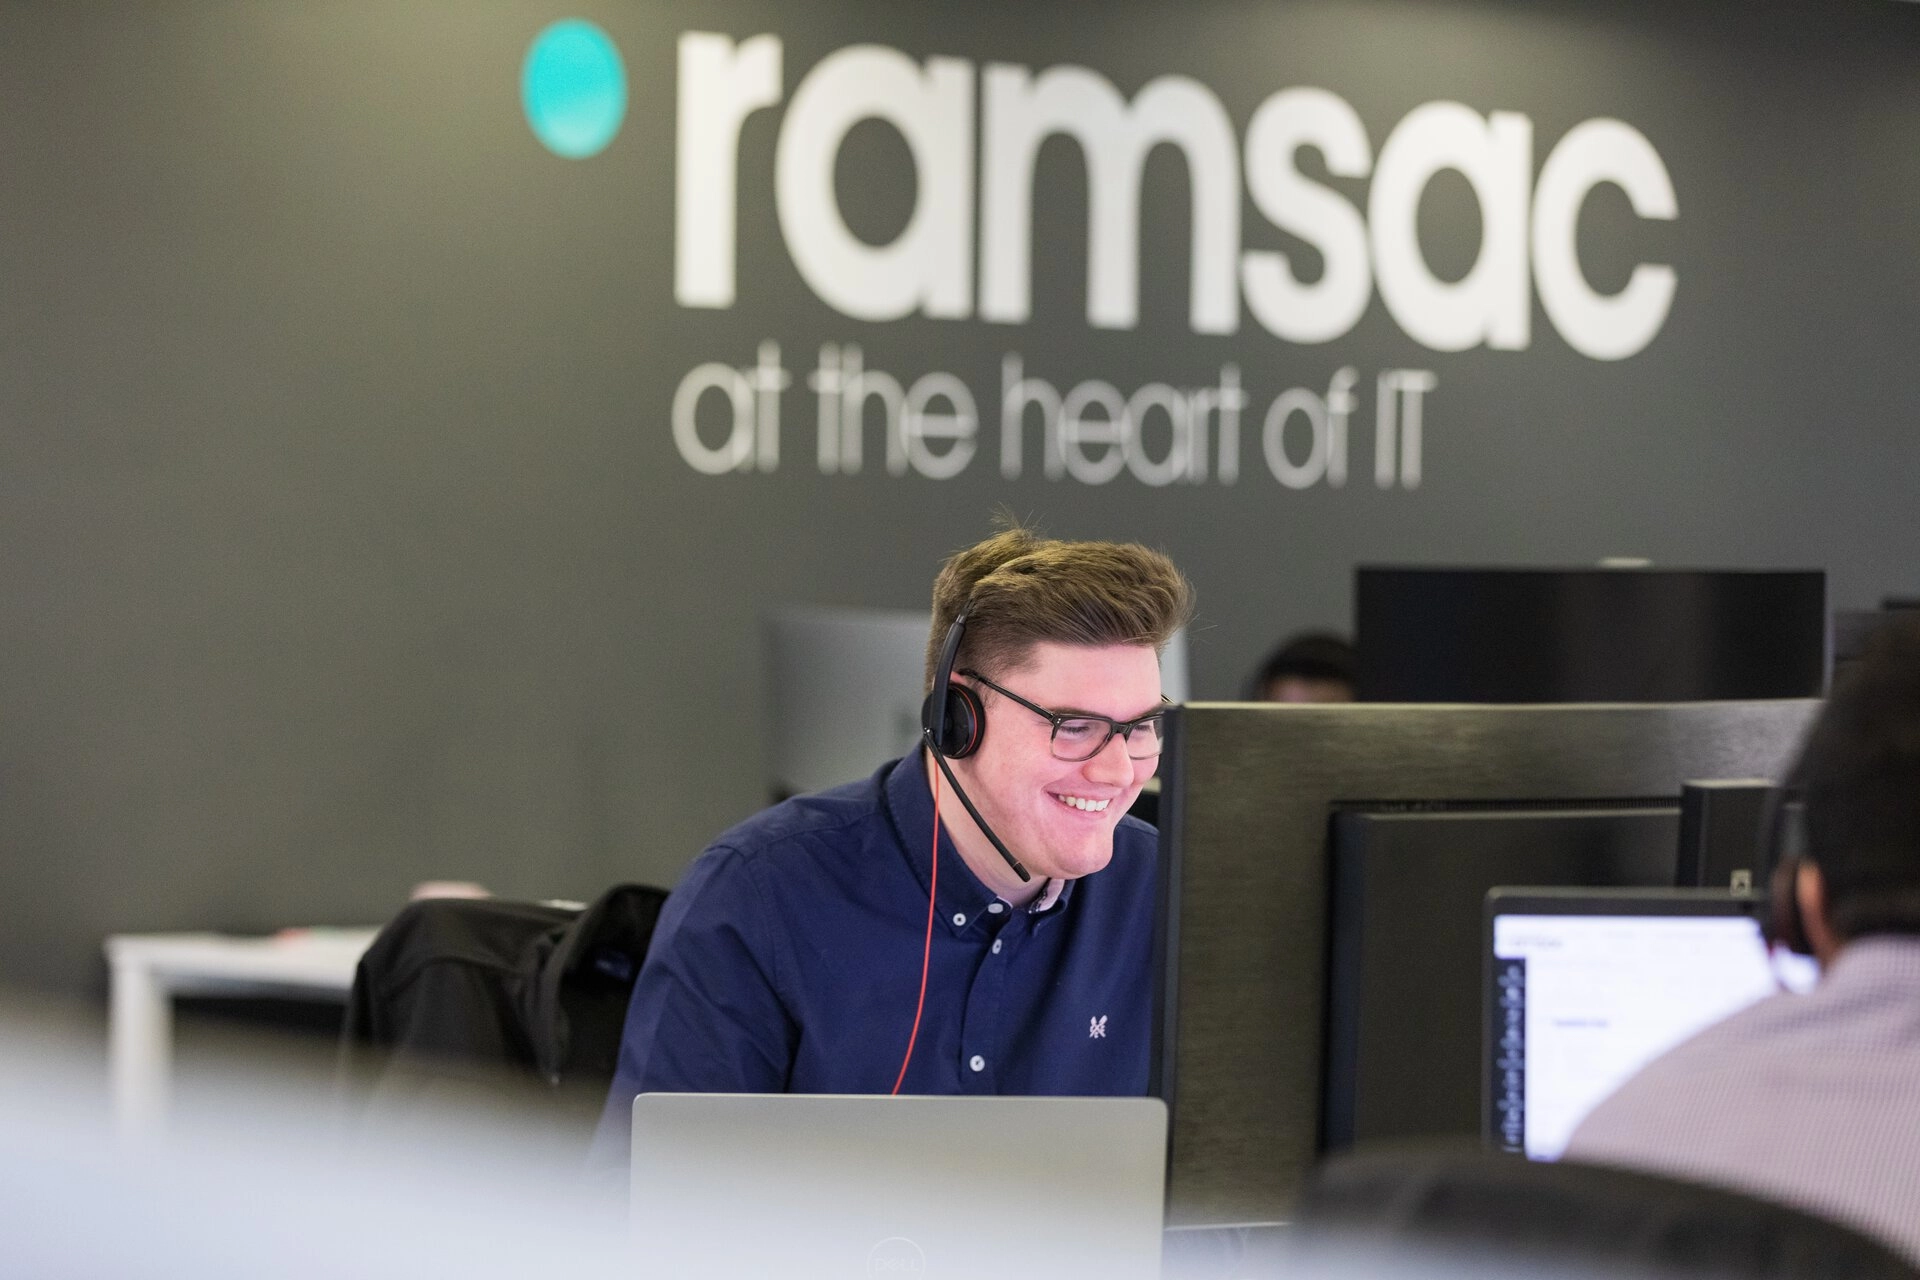 Rewarding IT careers with ramsac